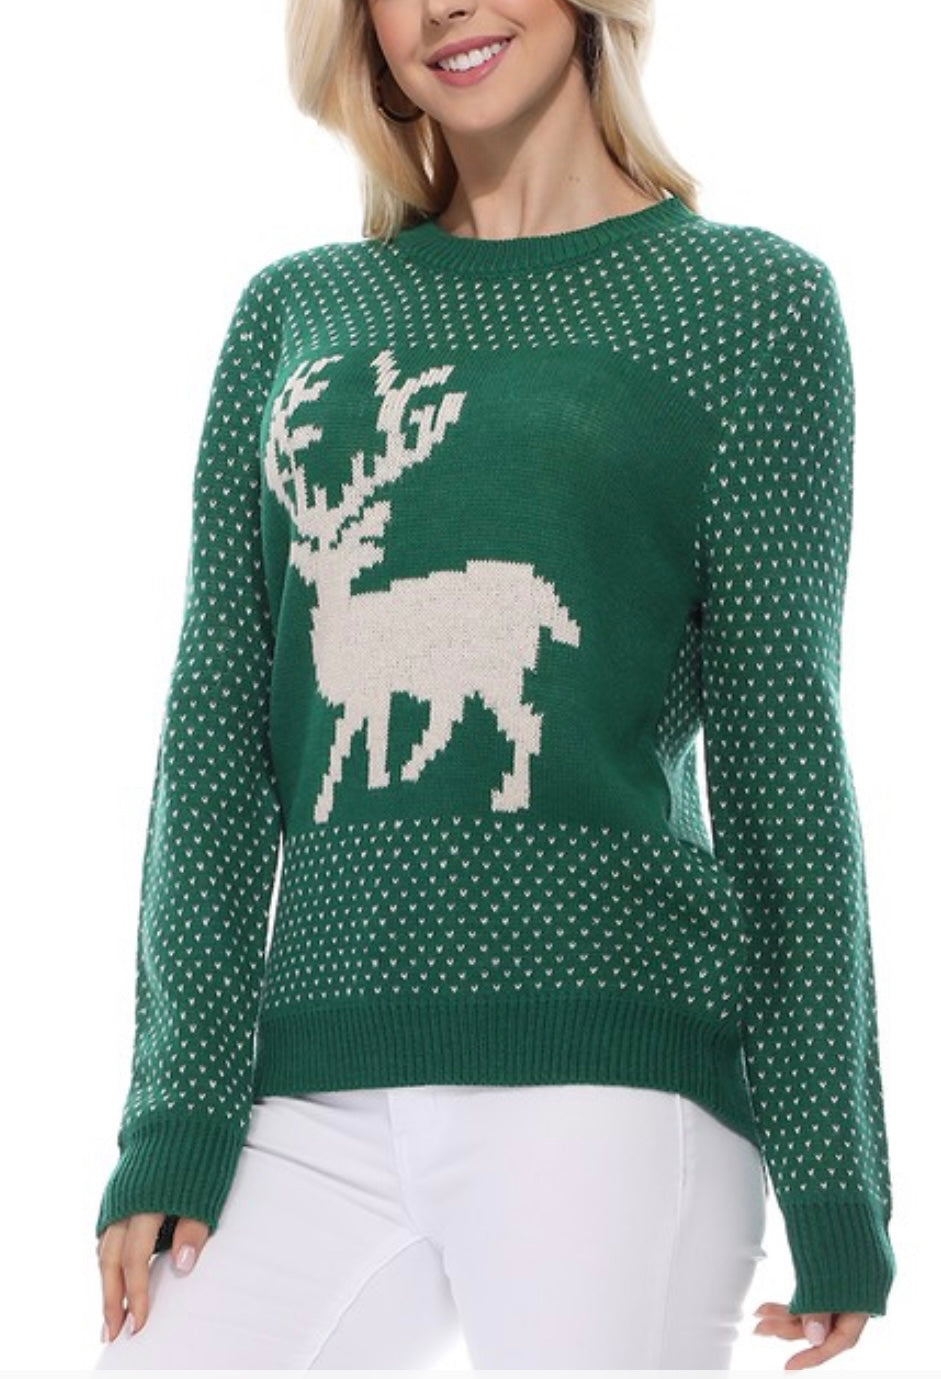 Rudolph Christmas sweater